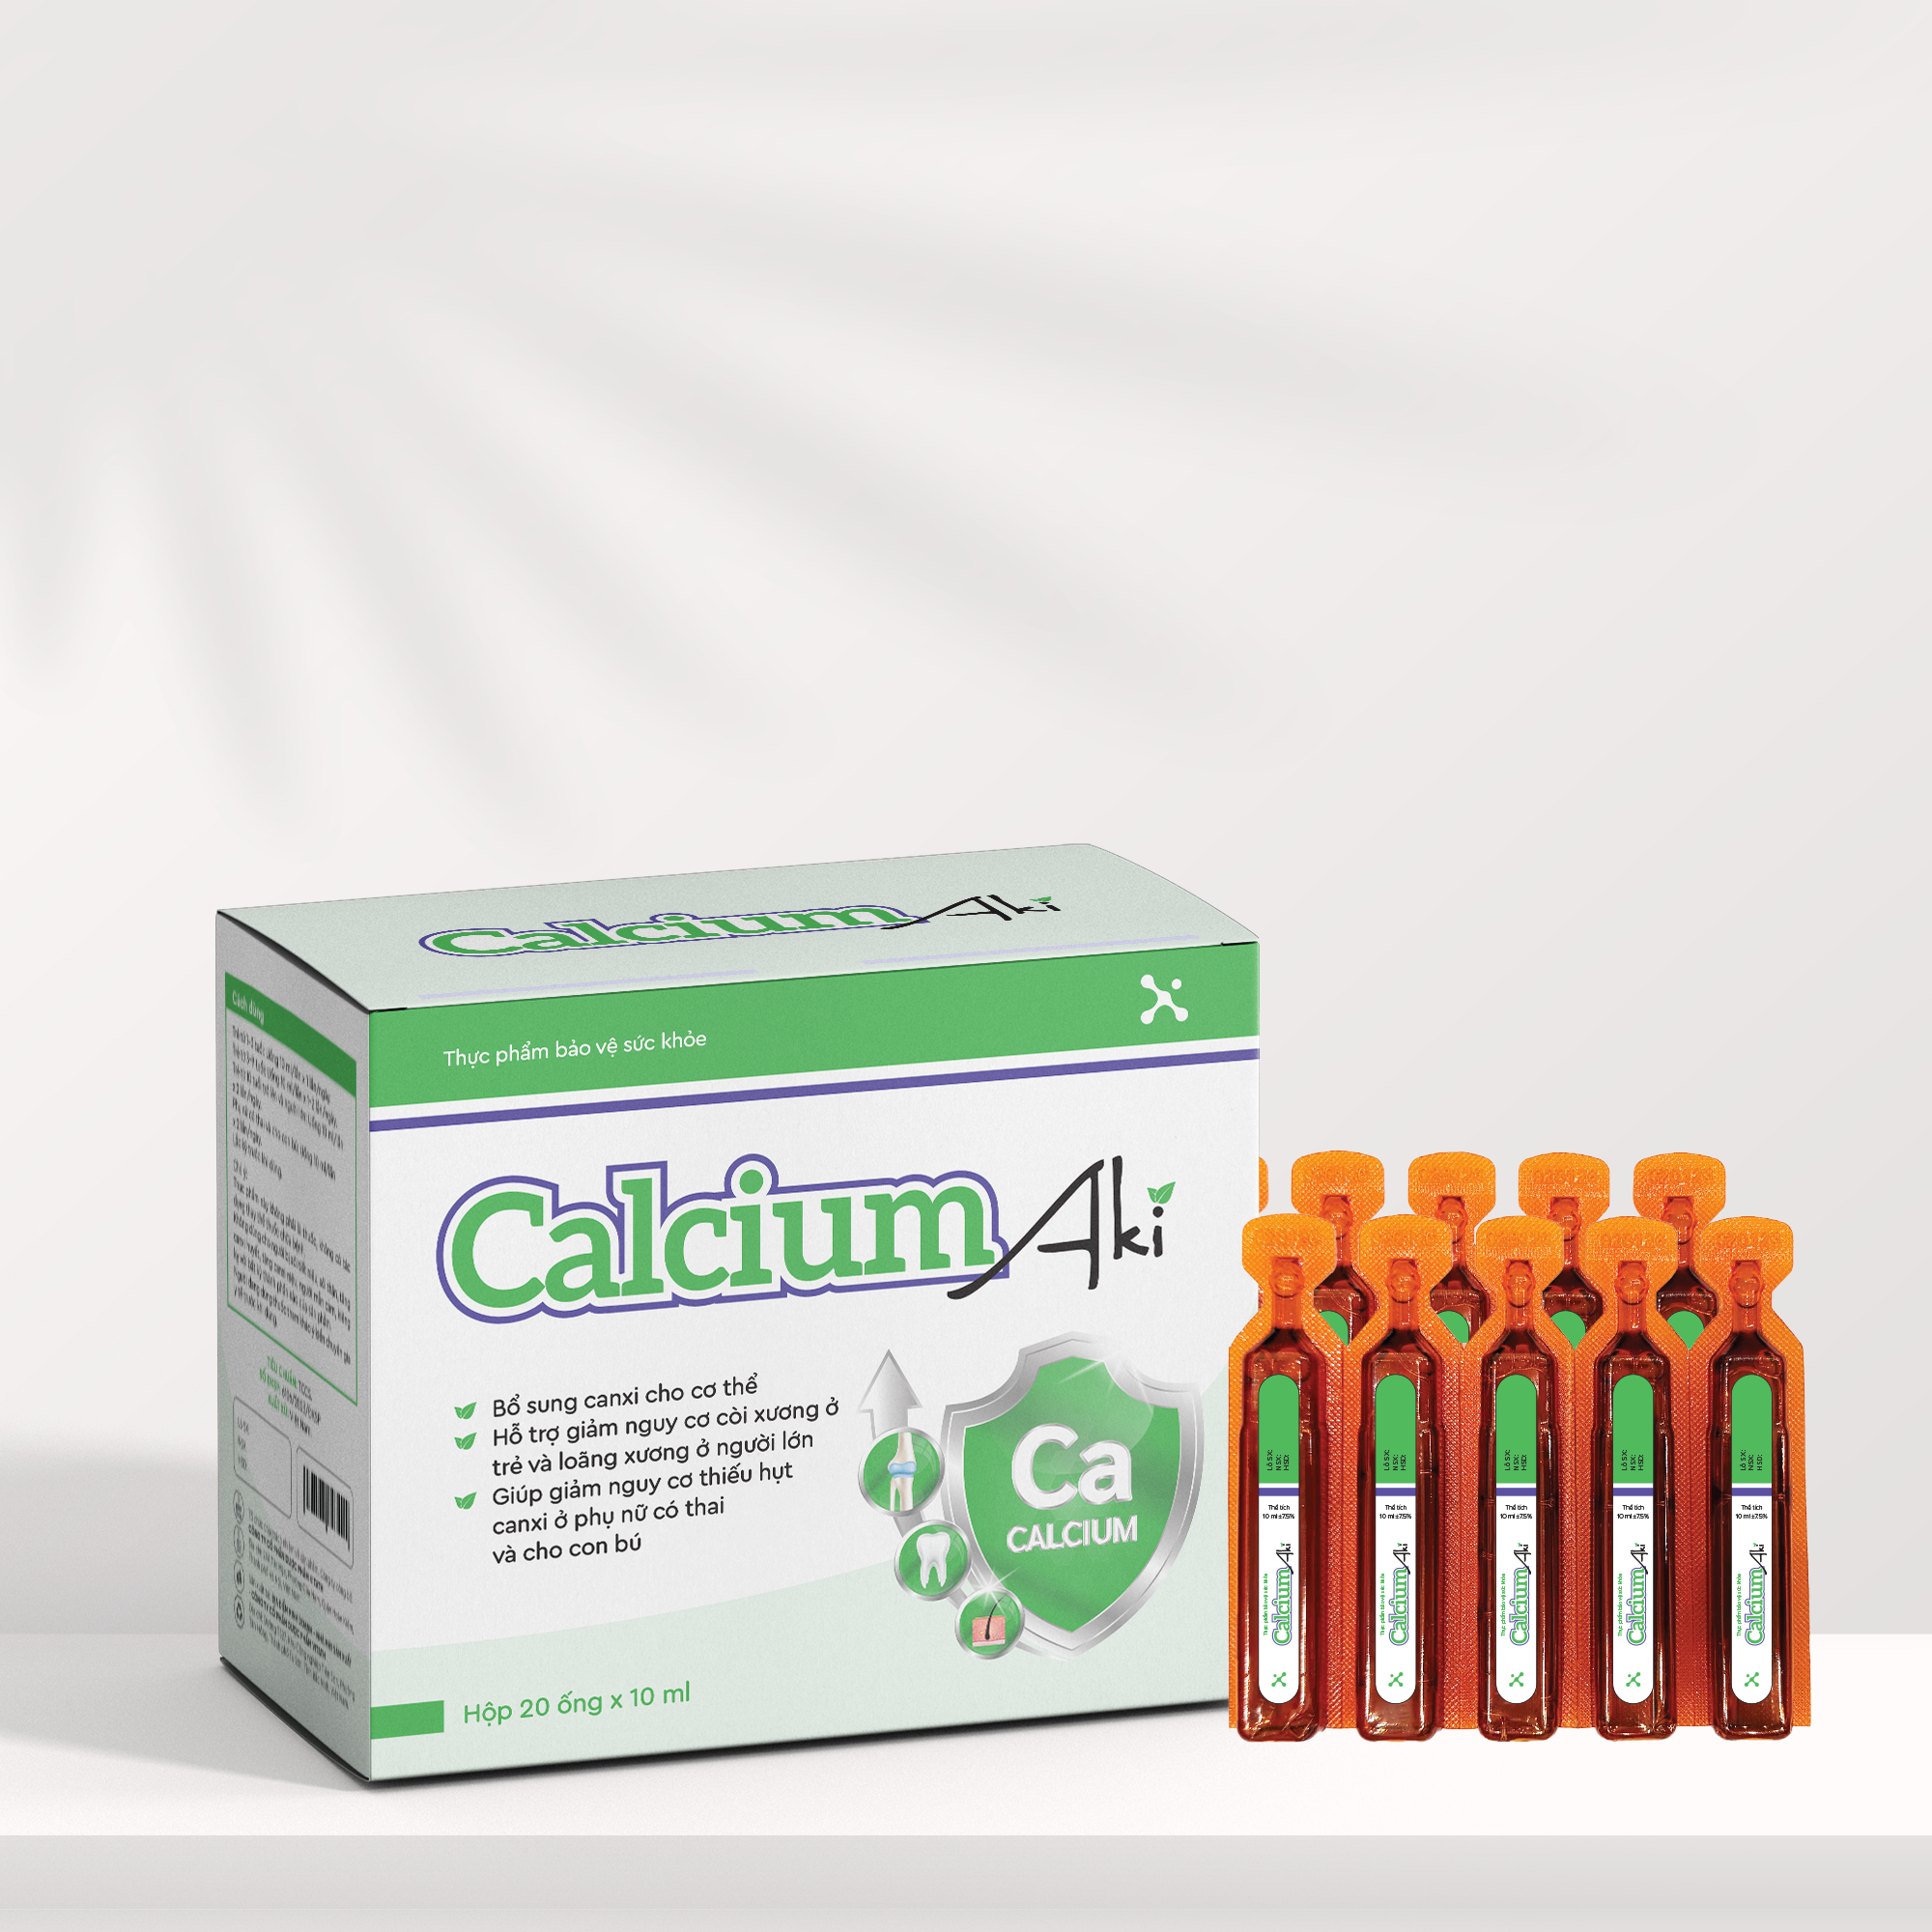 TPBVSK Calcium Aki - Bổ sung canxi cho cơ thể